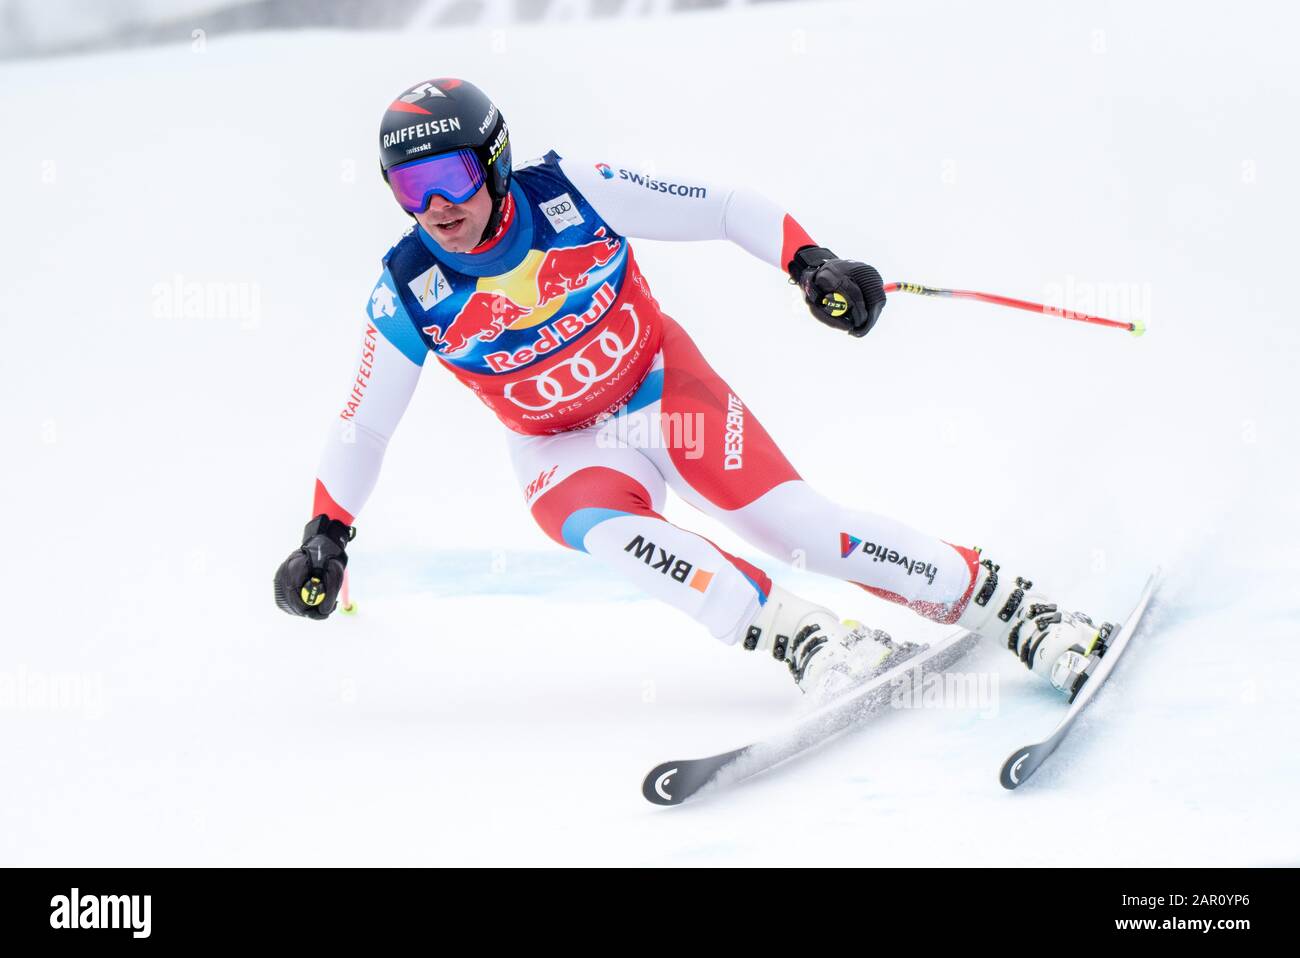 Beat Feuz of Switzerland at the Ski Alpin: 80. Hahnenkamm Race 2020 - Audi FIS Alpine Ski World Cup - Men's Downhill at the Streif on January 25, 2020 in Kitzbuehel, AUSTRIA. Credit: European Sports Photographic Agency/Alamy Live News Stock Photo